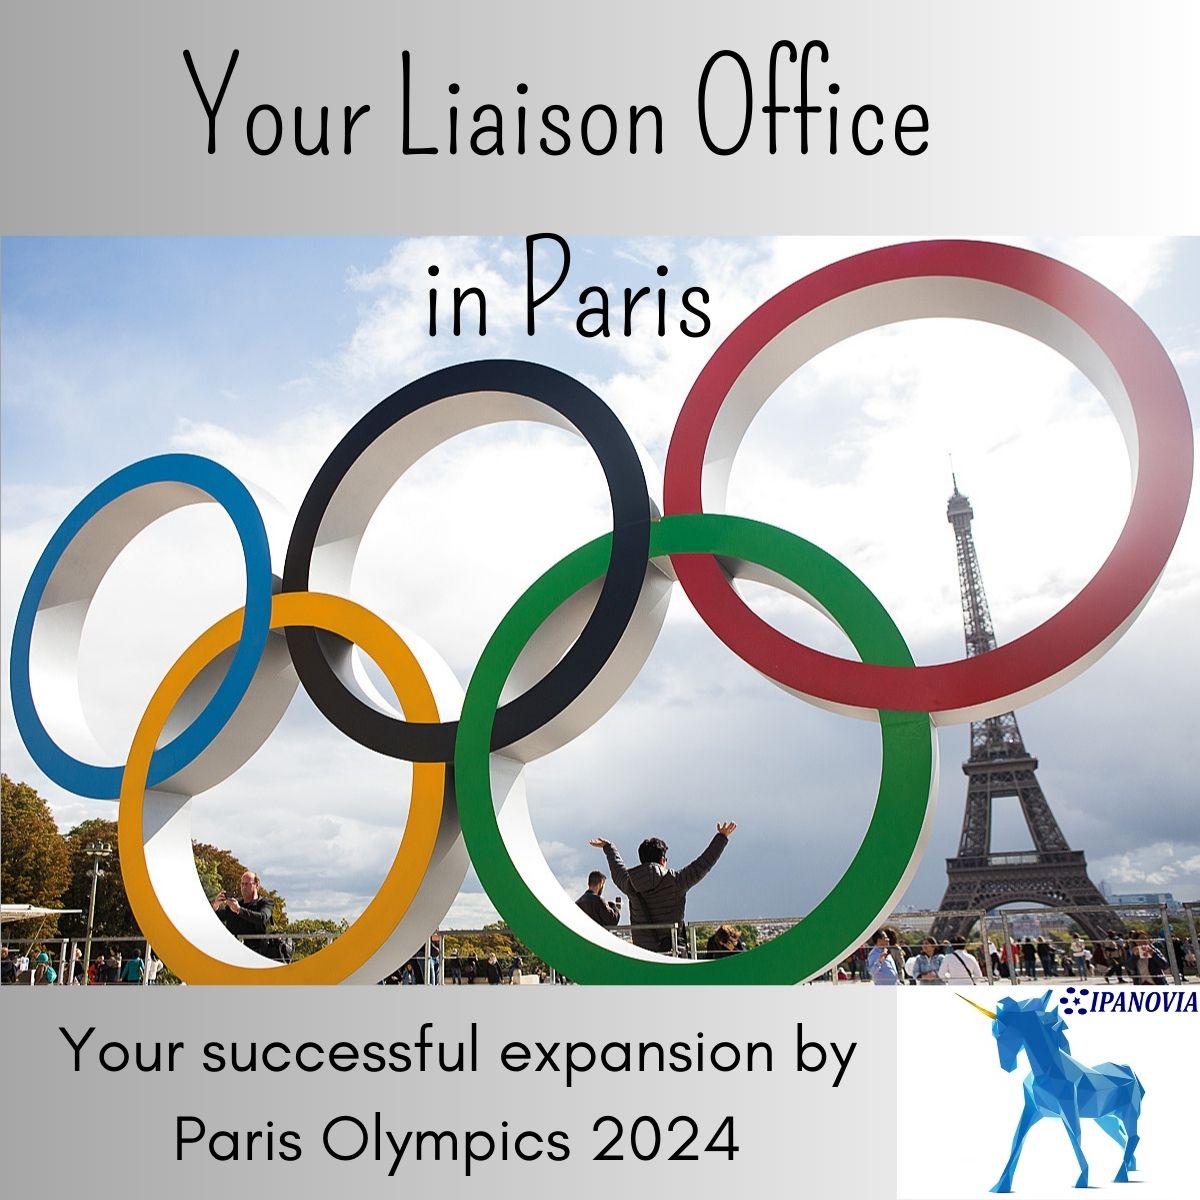 Paris 2024 Olympics organized by Ipanovia